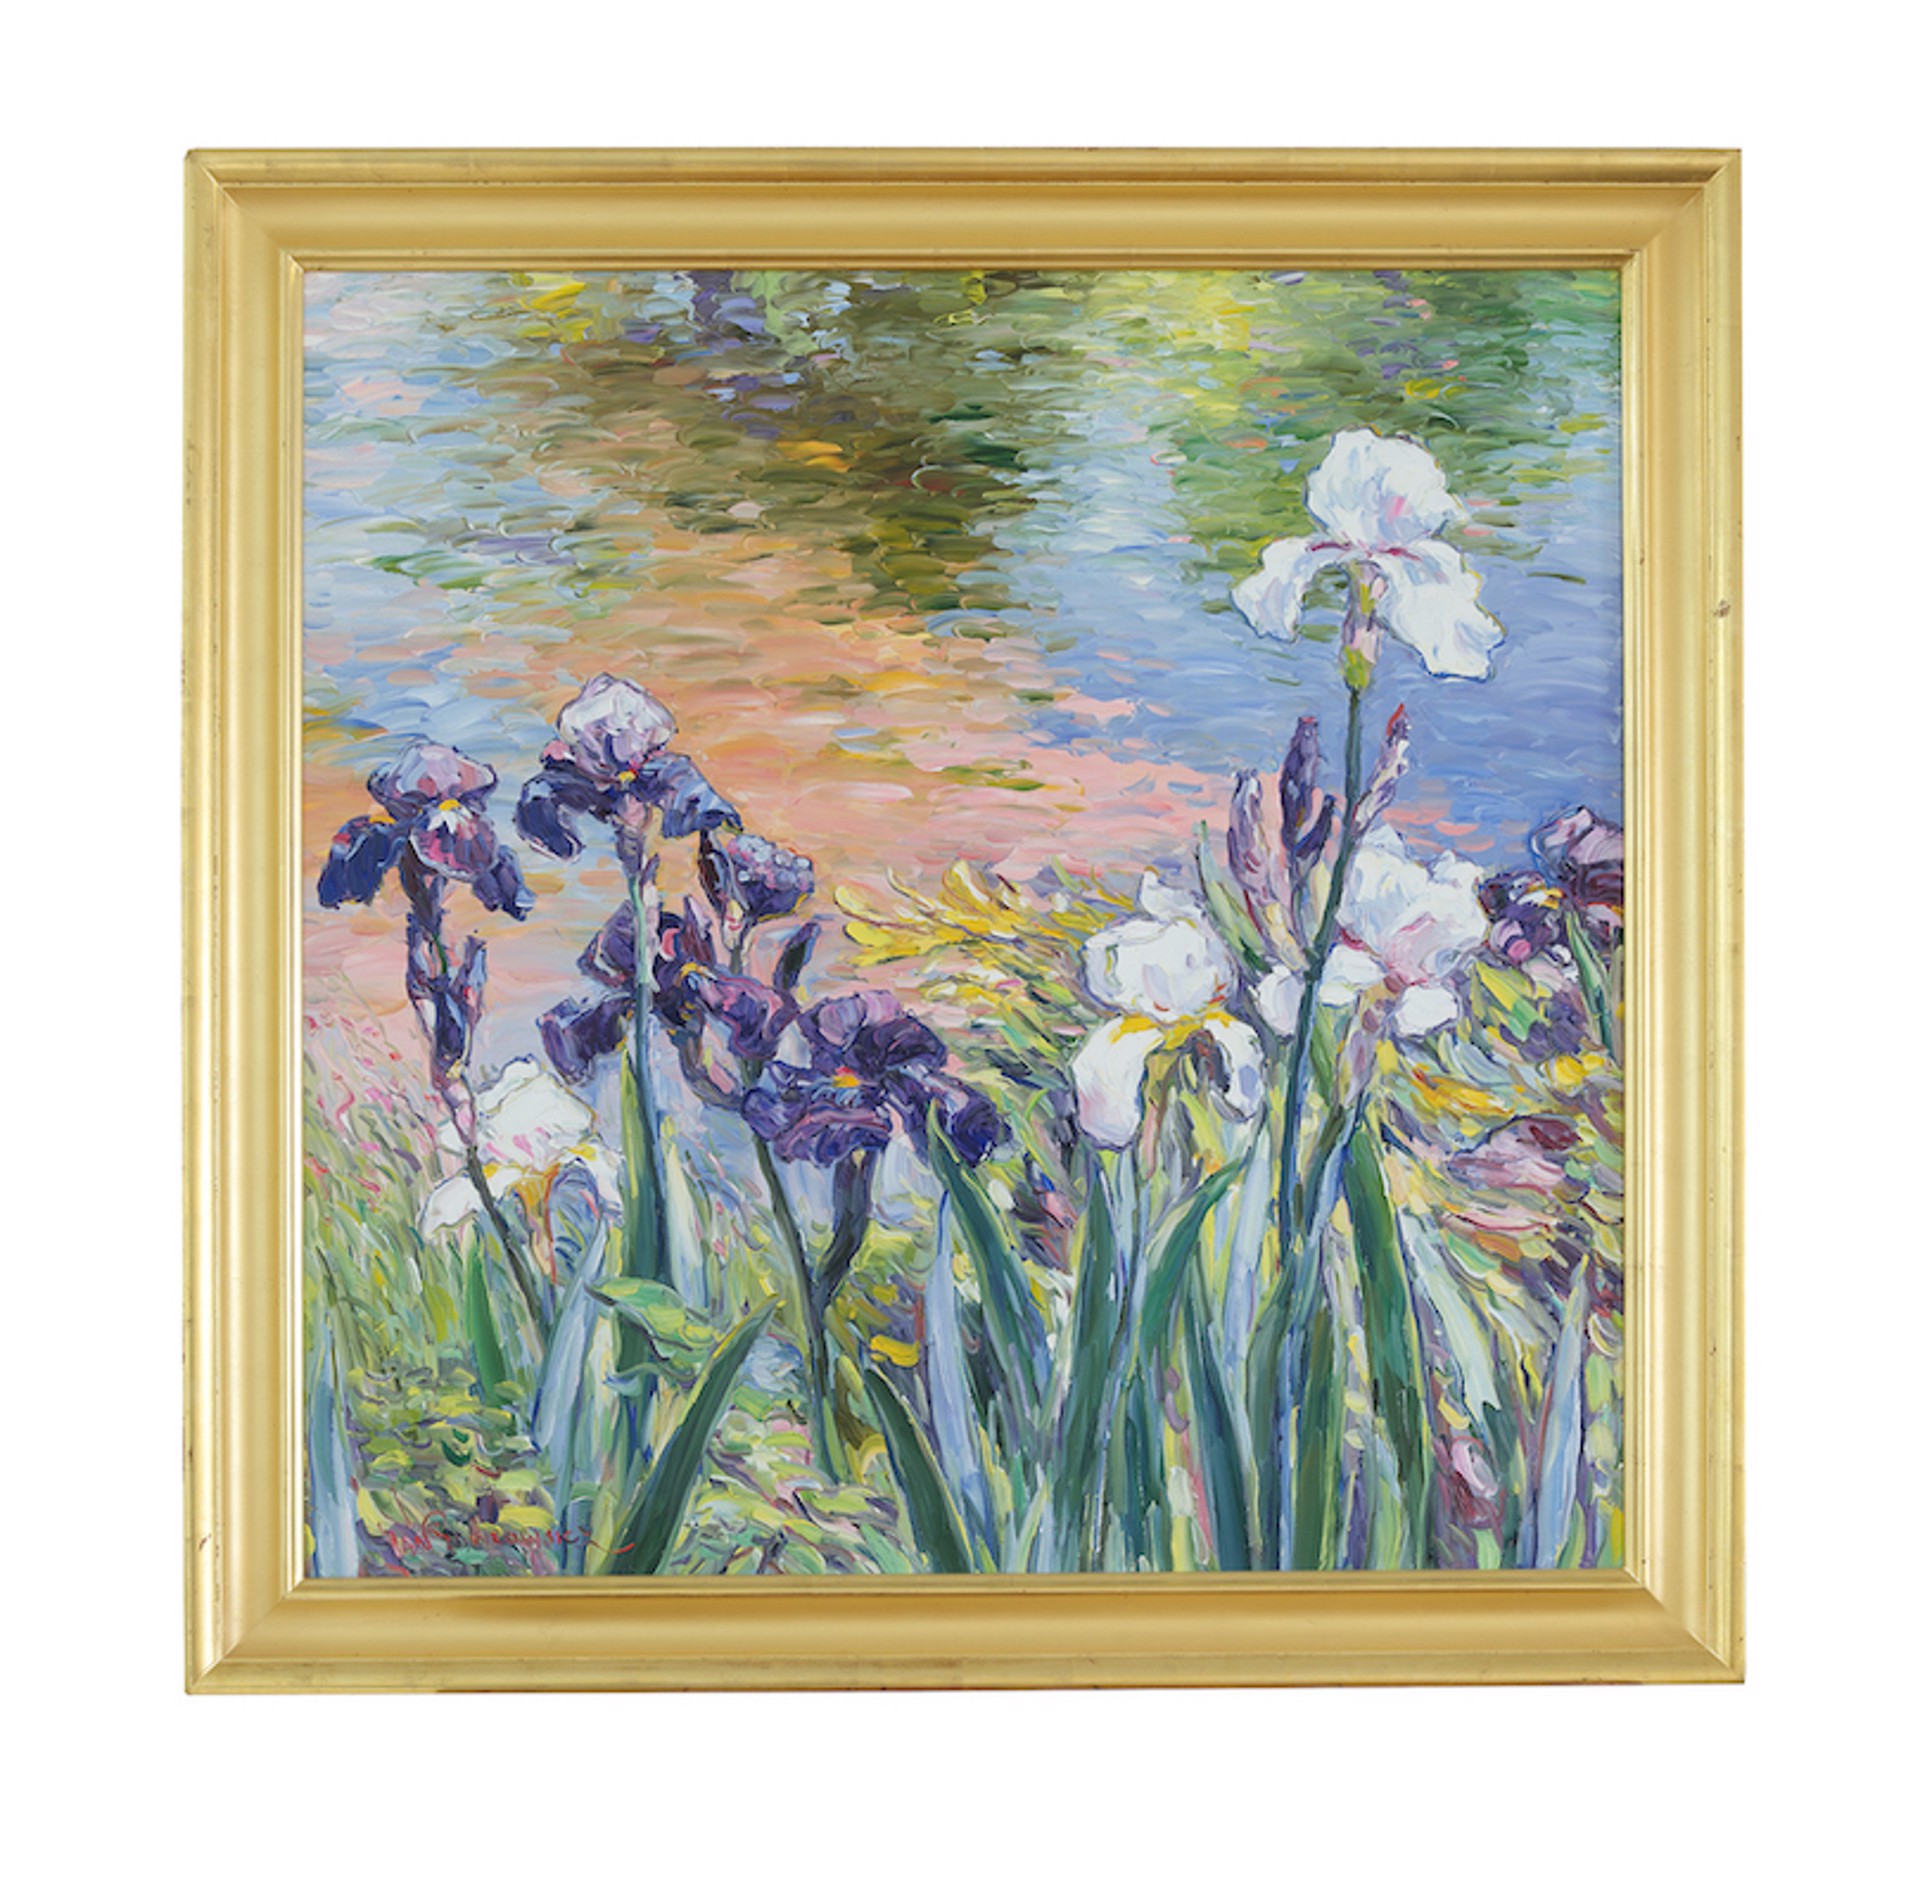 Irises at Schoolhouse Pond by Jan Pawlowski